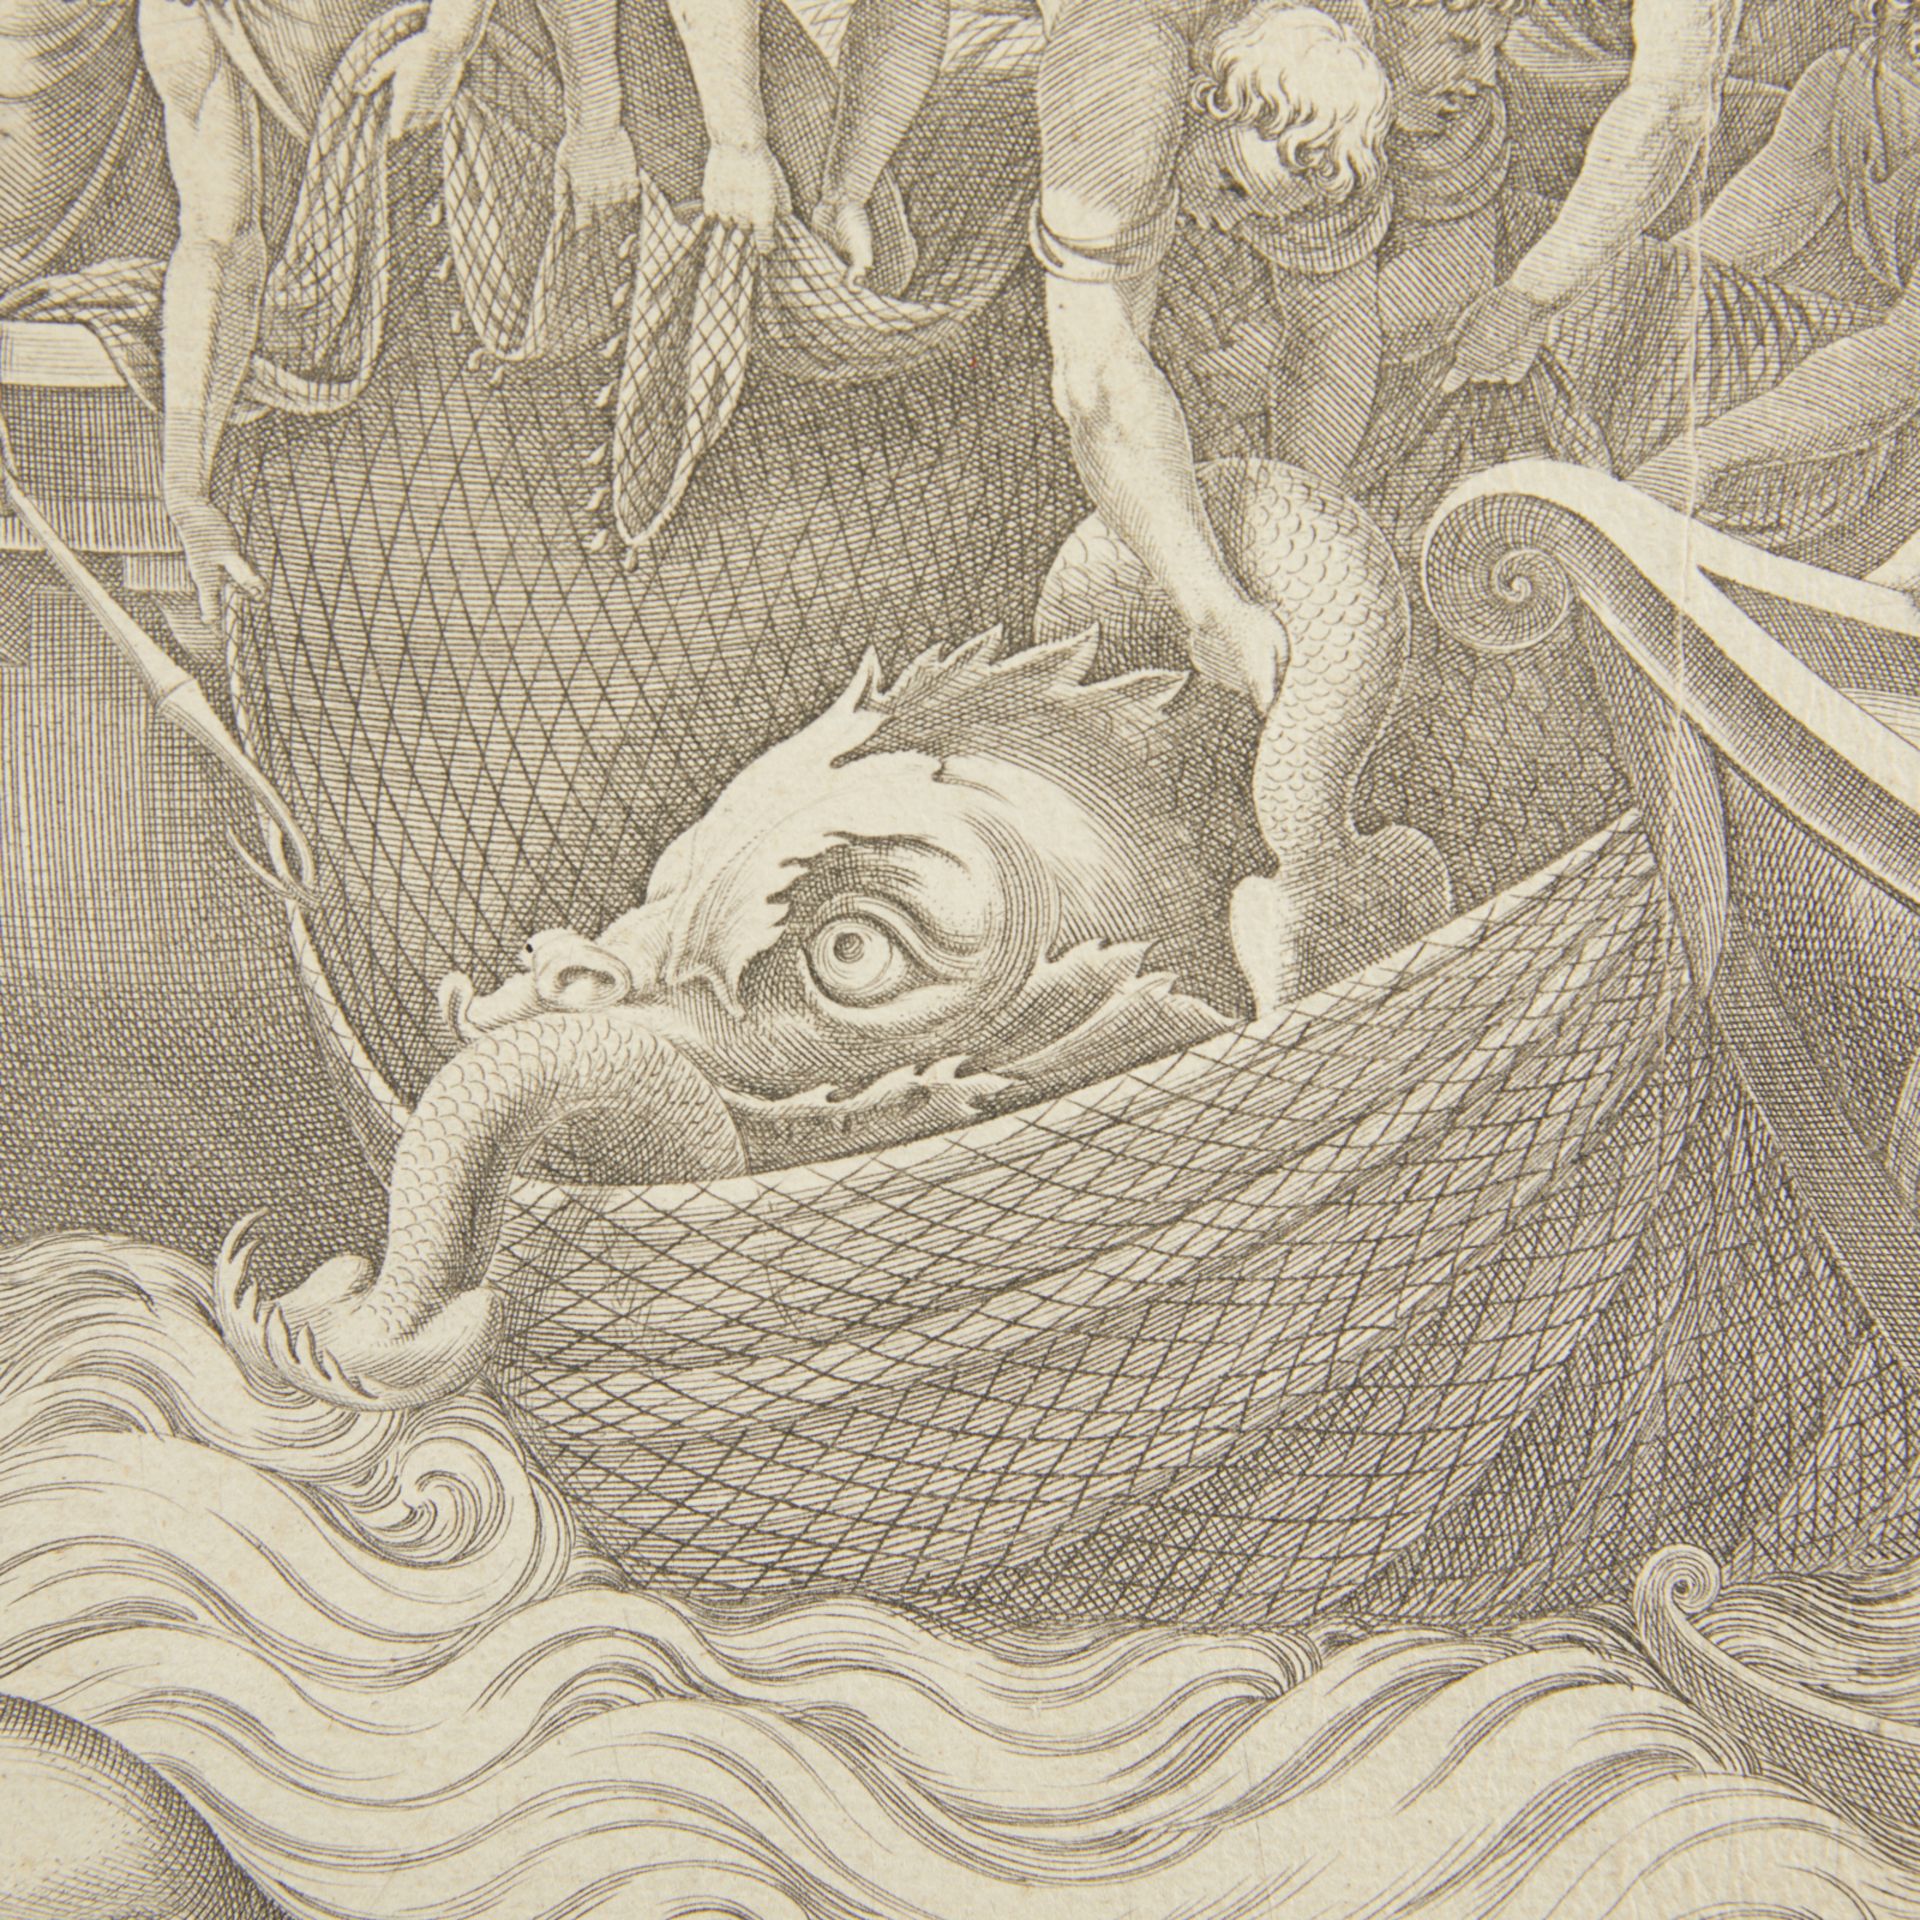 Adamo Scultori "Fisherman w/ Sea Monster" Etching - Image 4 of 7